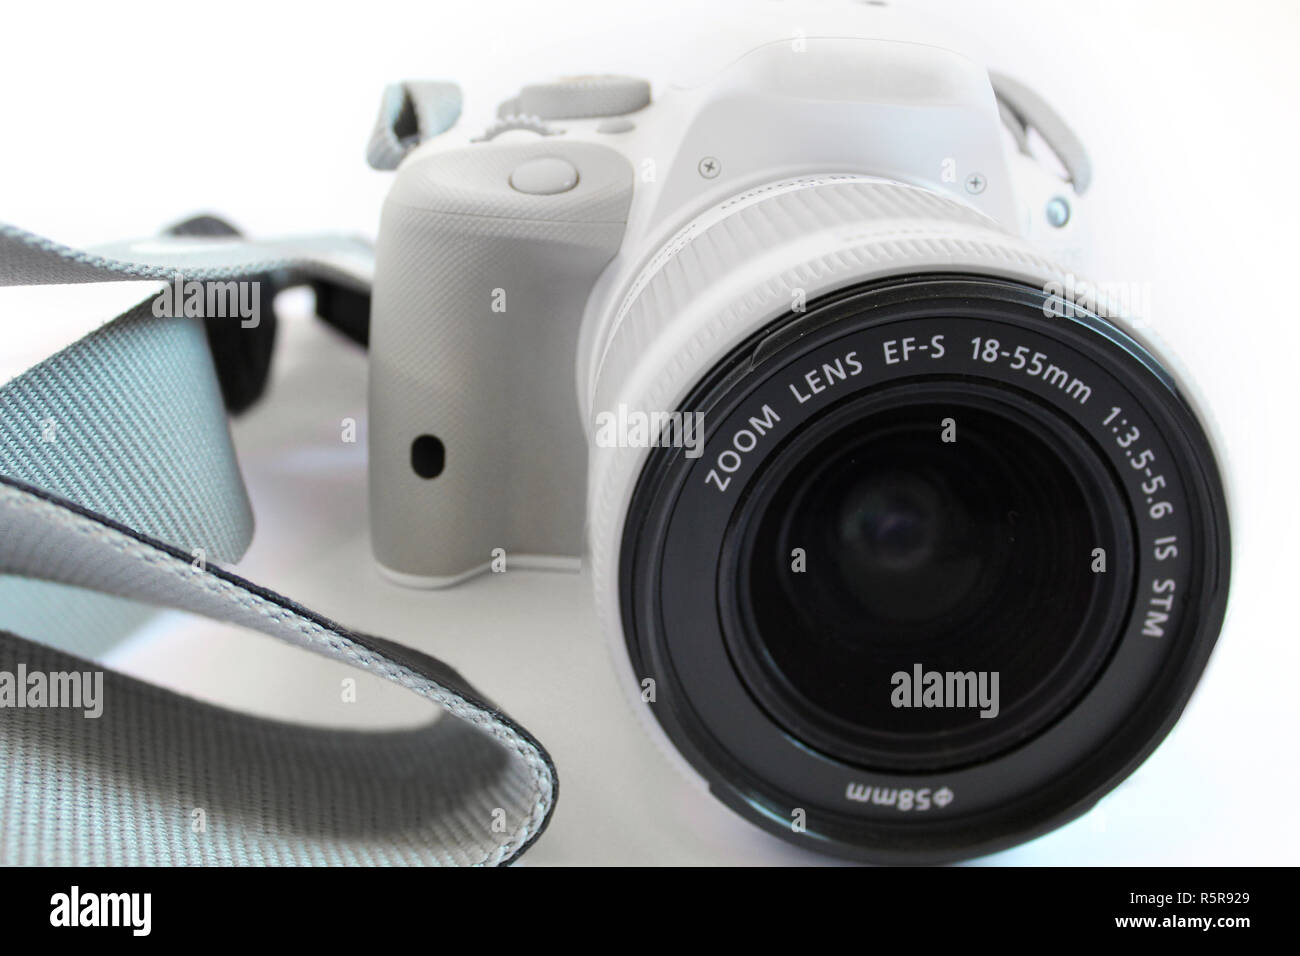 Fotocamera reflex digitale reflex a lente singola bianco Foto Stock